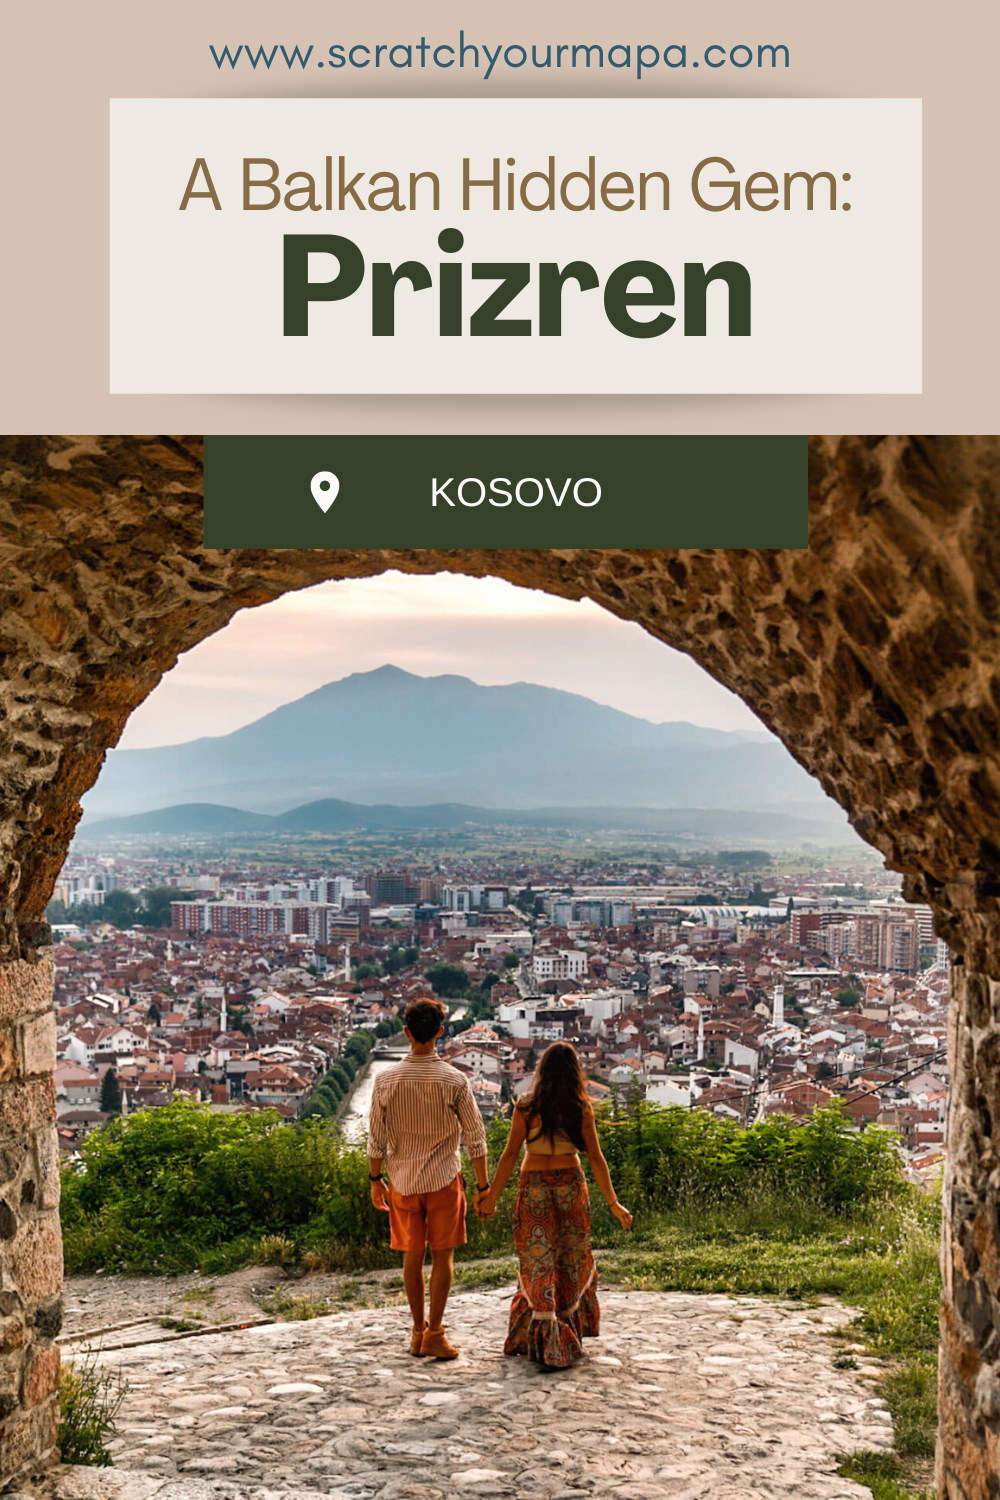 Things to do in Prizren Pin